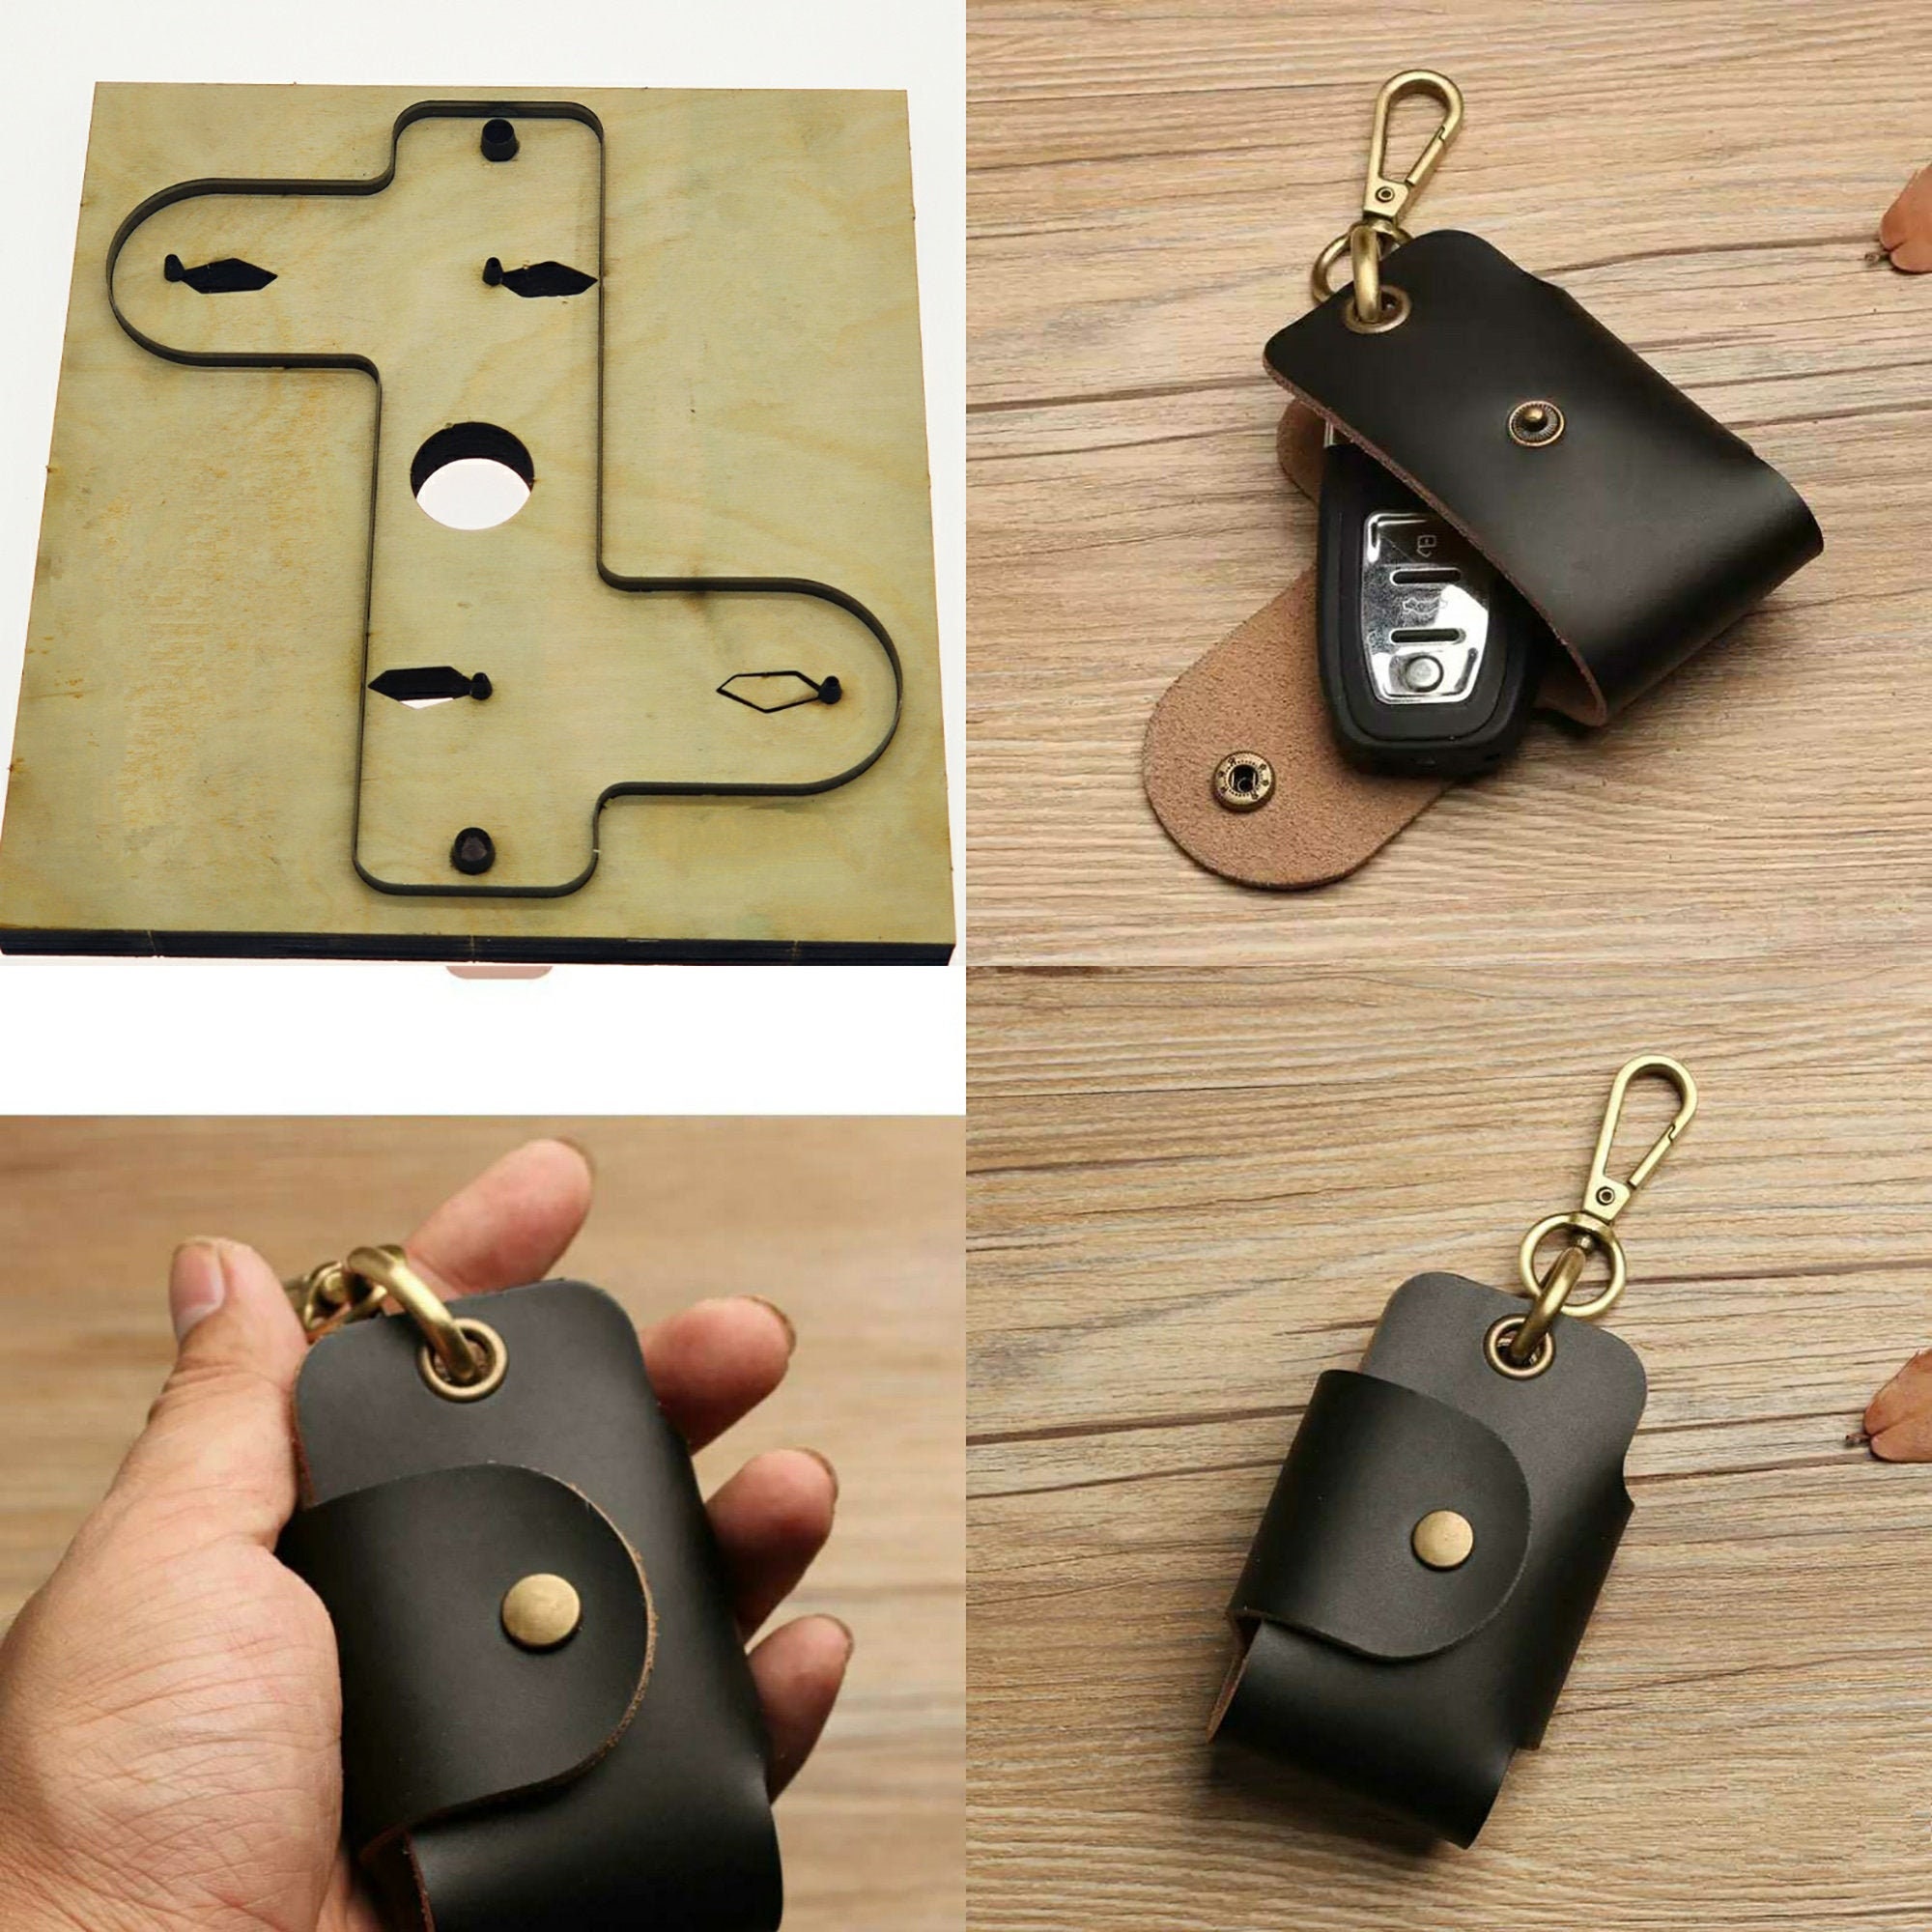 3D Design 7105-0111 Universal Black Leather Key Case (w/ Blue Stitching) - Type A